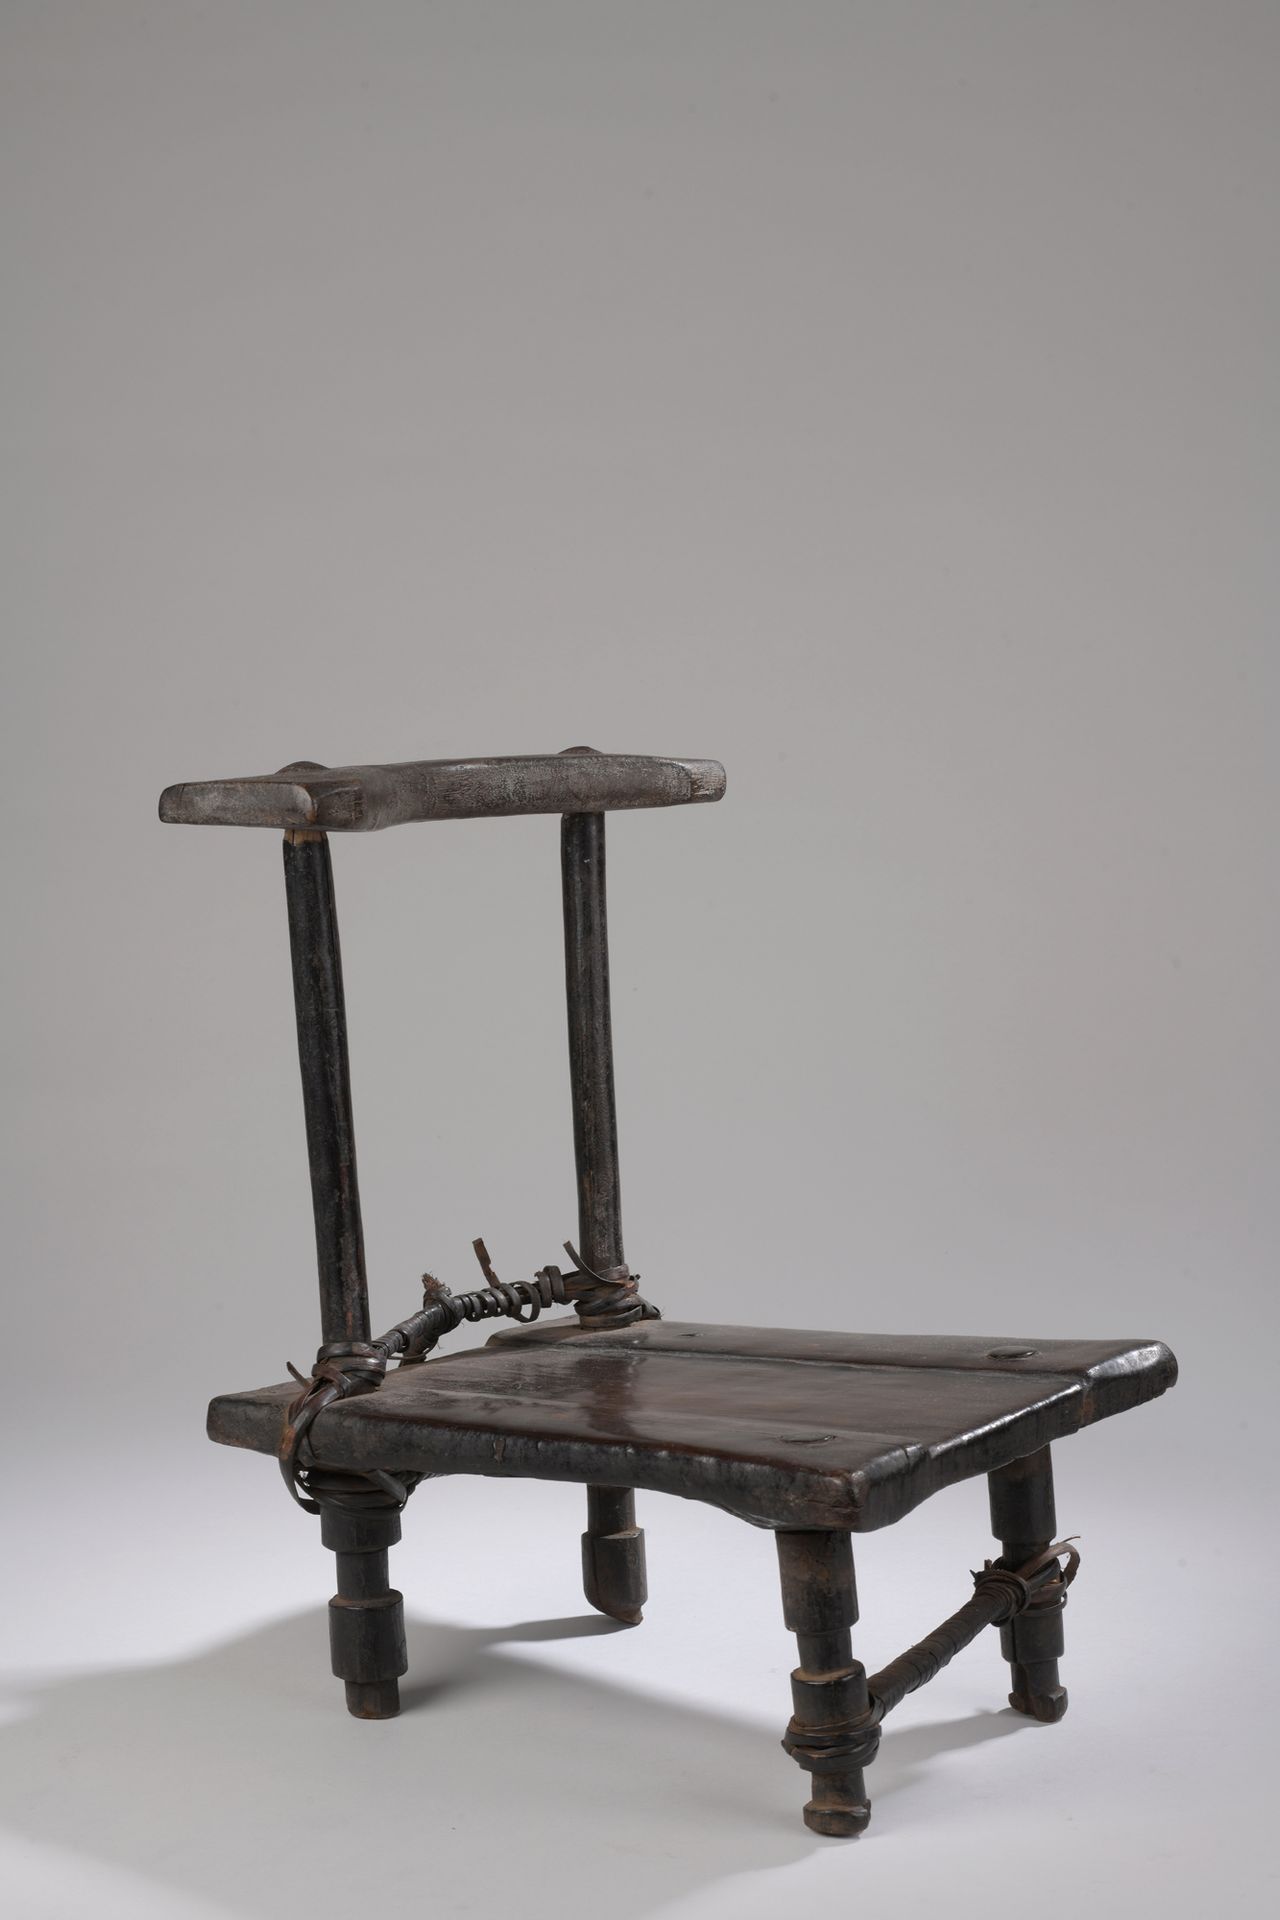 Null GREBO KROU主席，象牙海岸 

带有深棕色铜锈的木材，柳条。

H.41 W. 33 cm

这把小椅子上有美丽的古铜色，座位长于宽。